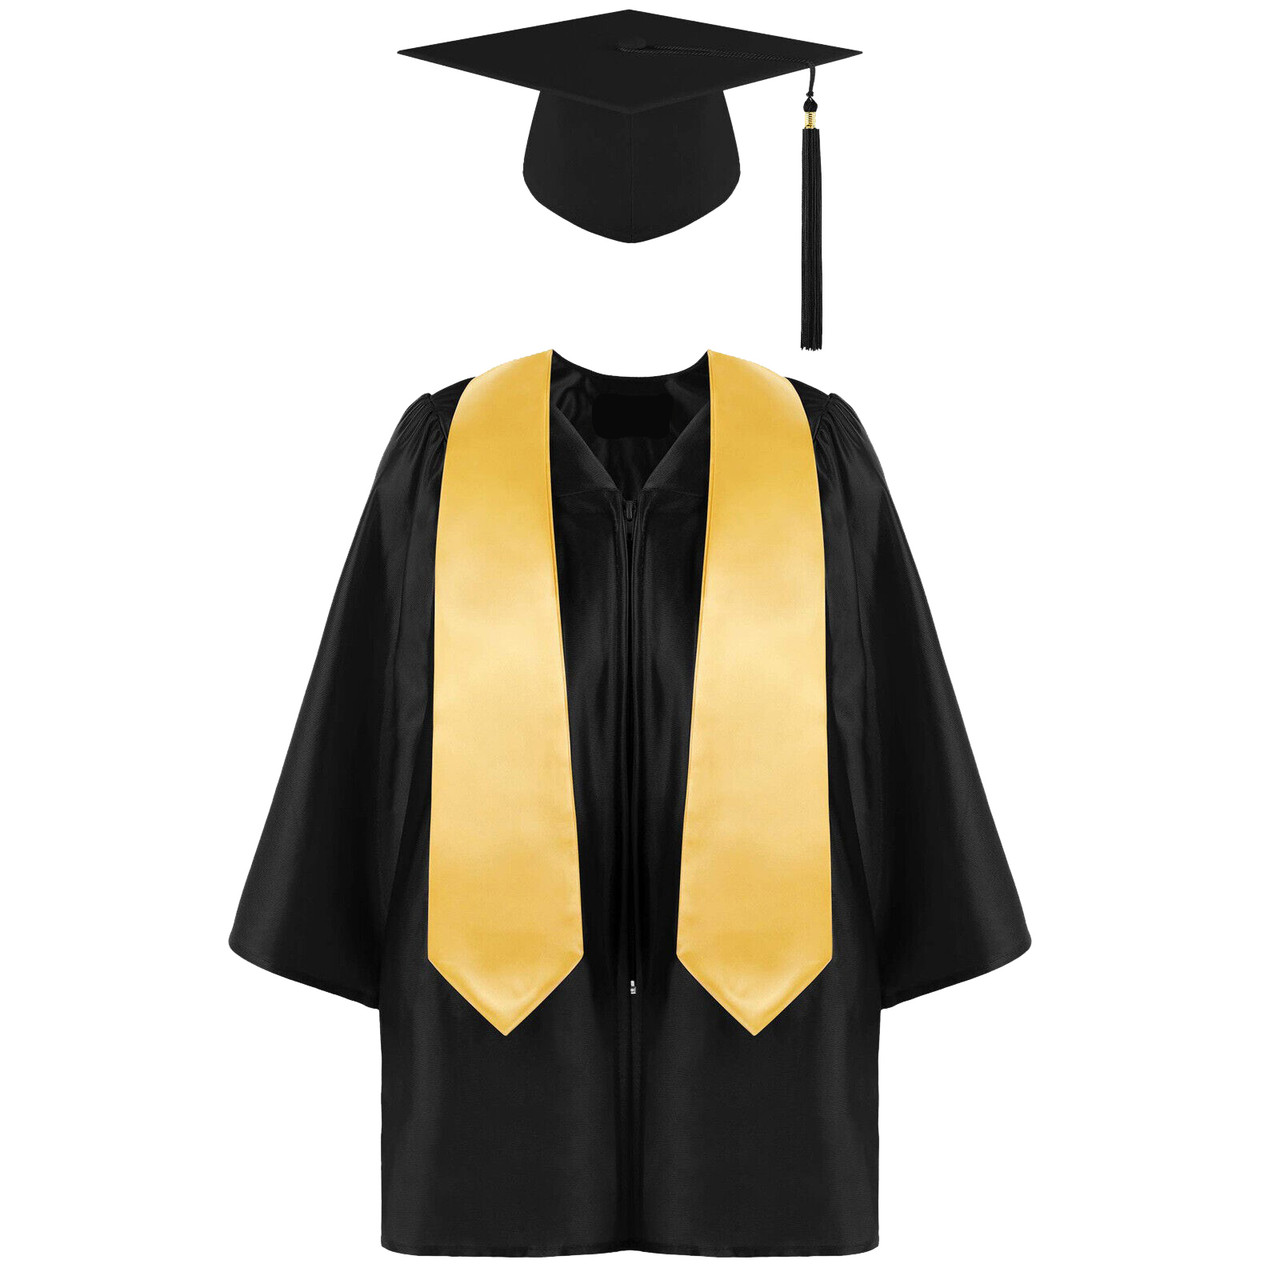 Female Graduates Wear Black Gowns Yellow Stock Photo 2215976983 |  Shutterstock